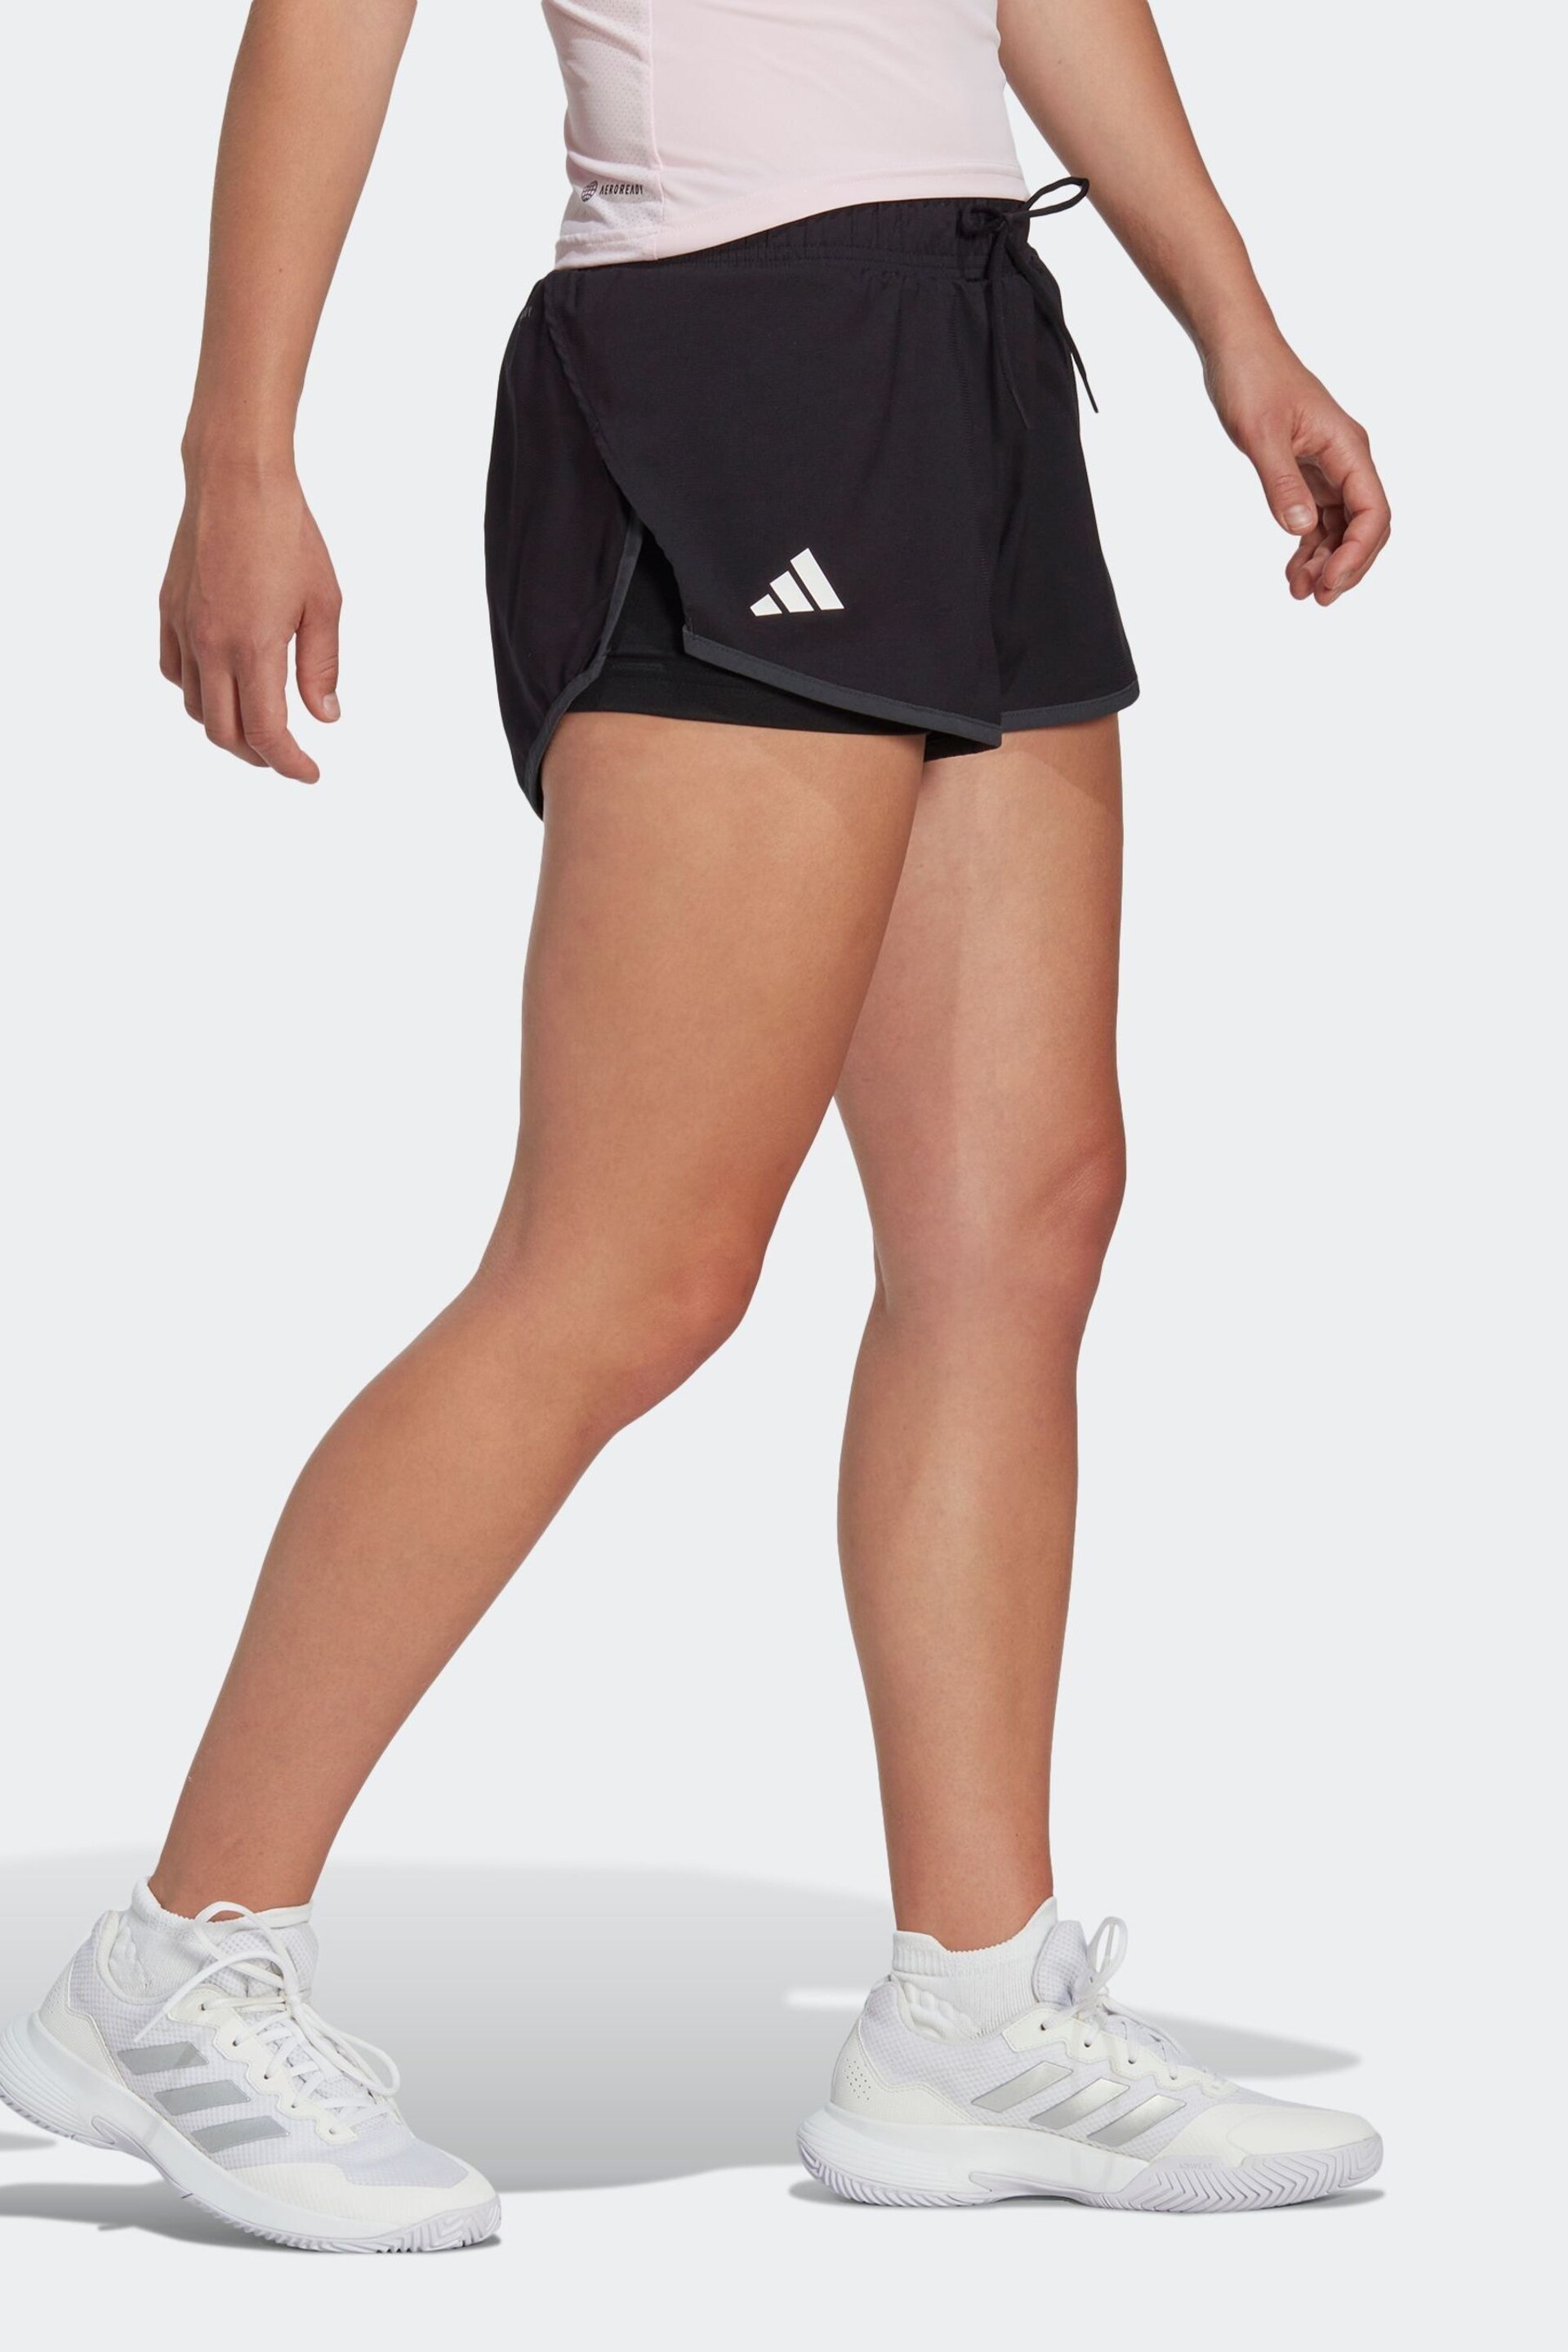 adidas Black Adult Sport Club Tennis Shorts - Image 3 of 7